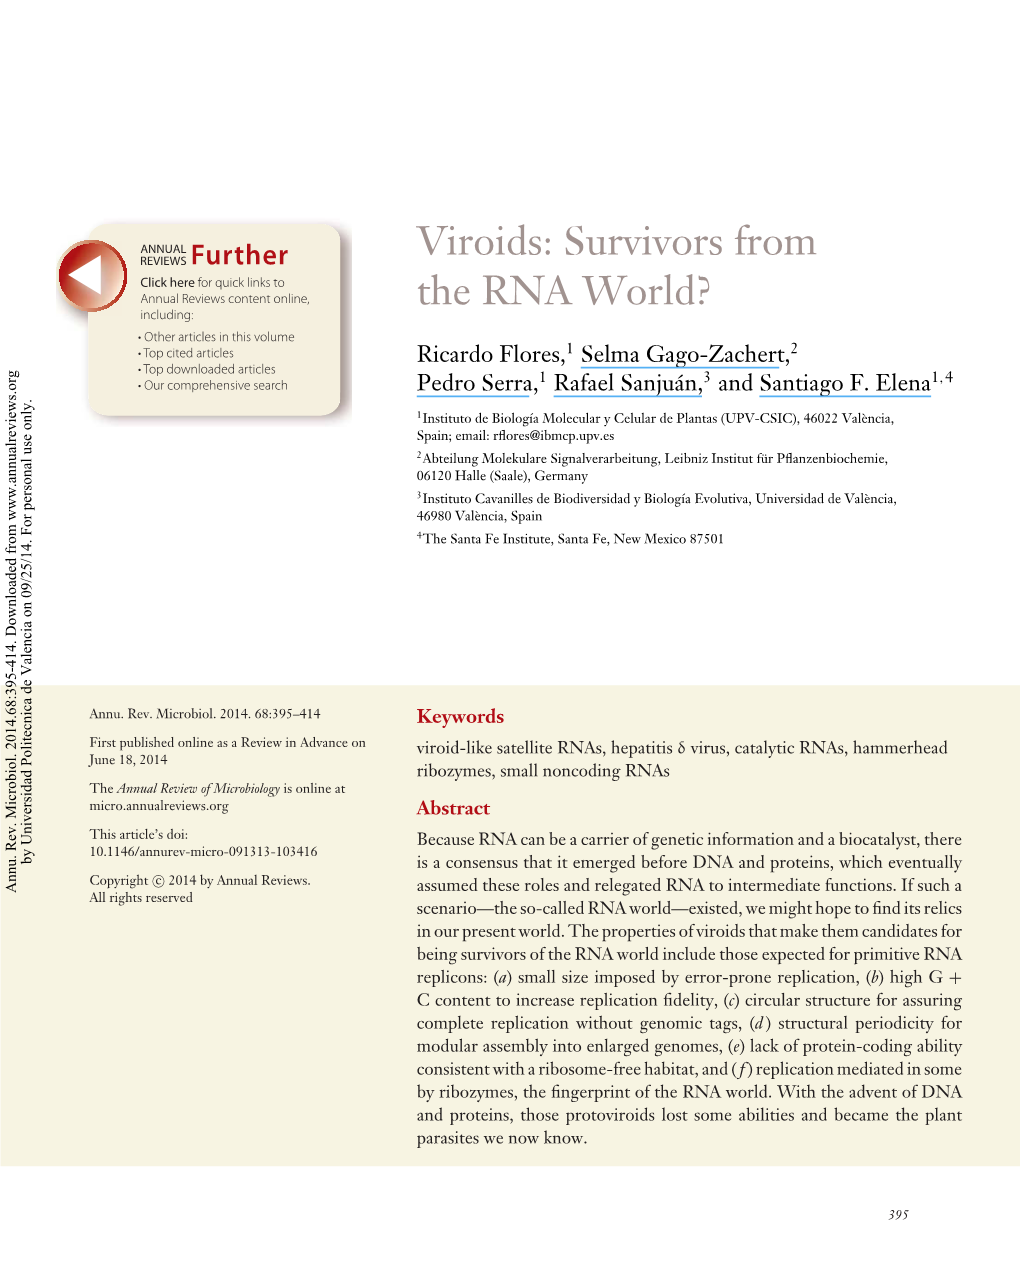 Viroids: Survivors from the RNA World?